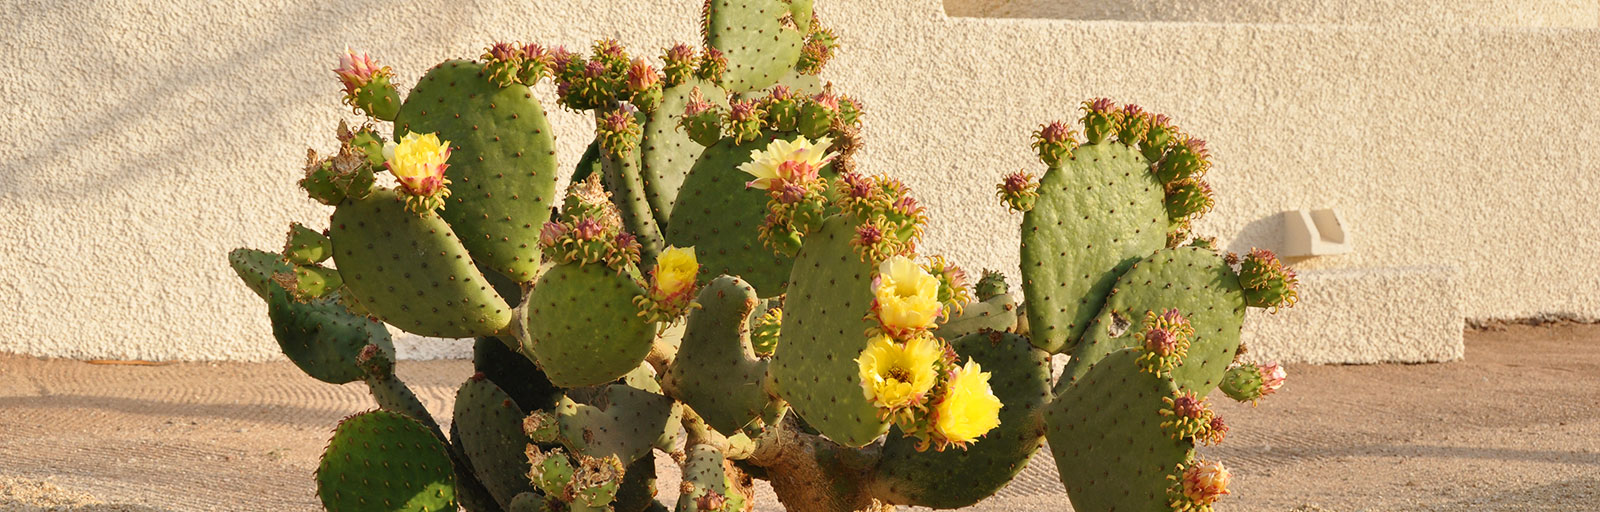 Gardens at Yoga Retreat Mexico: Prickly Pear Cactus in Bloom